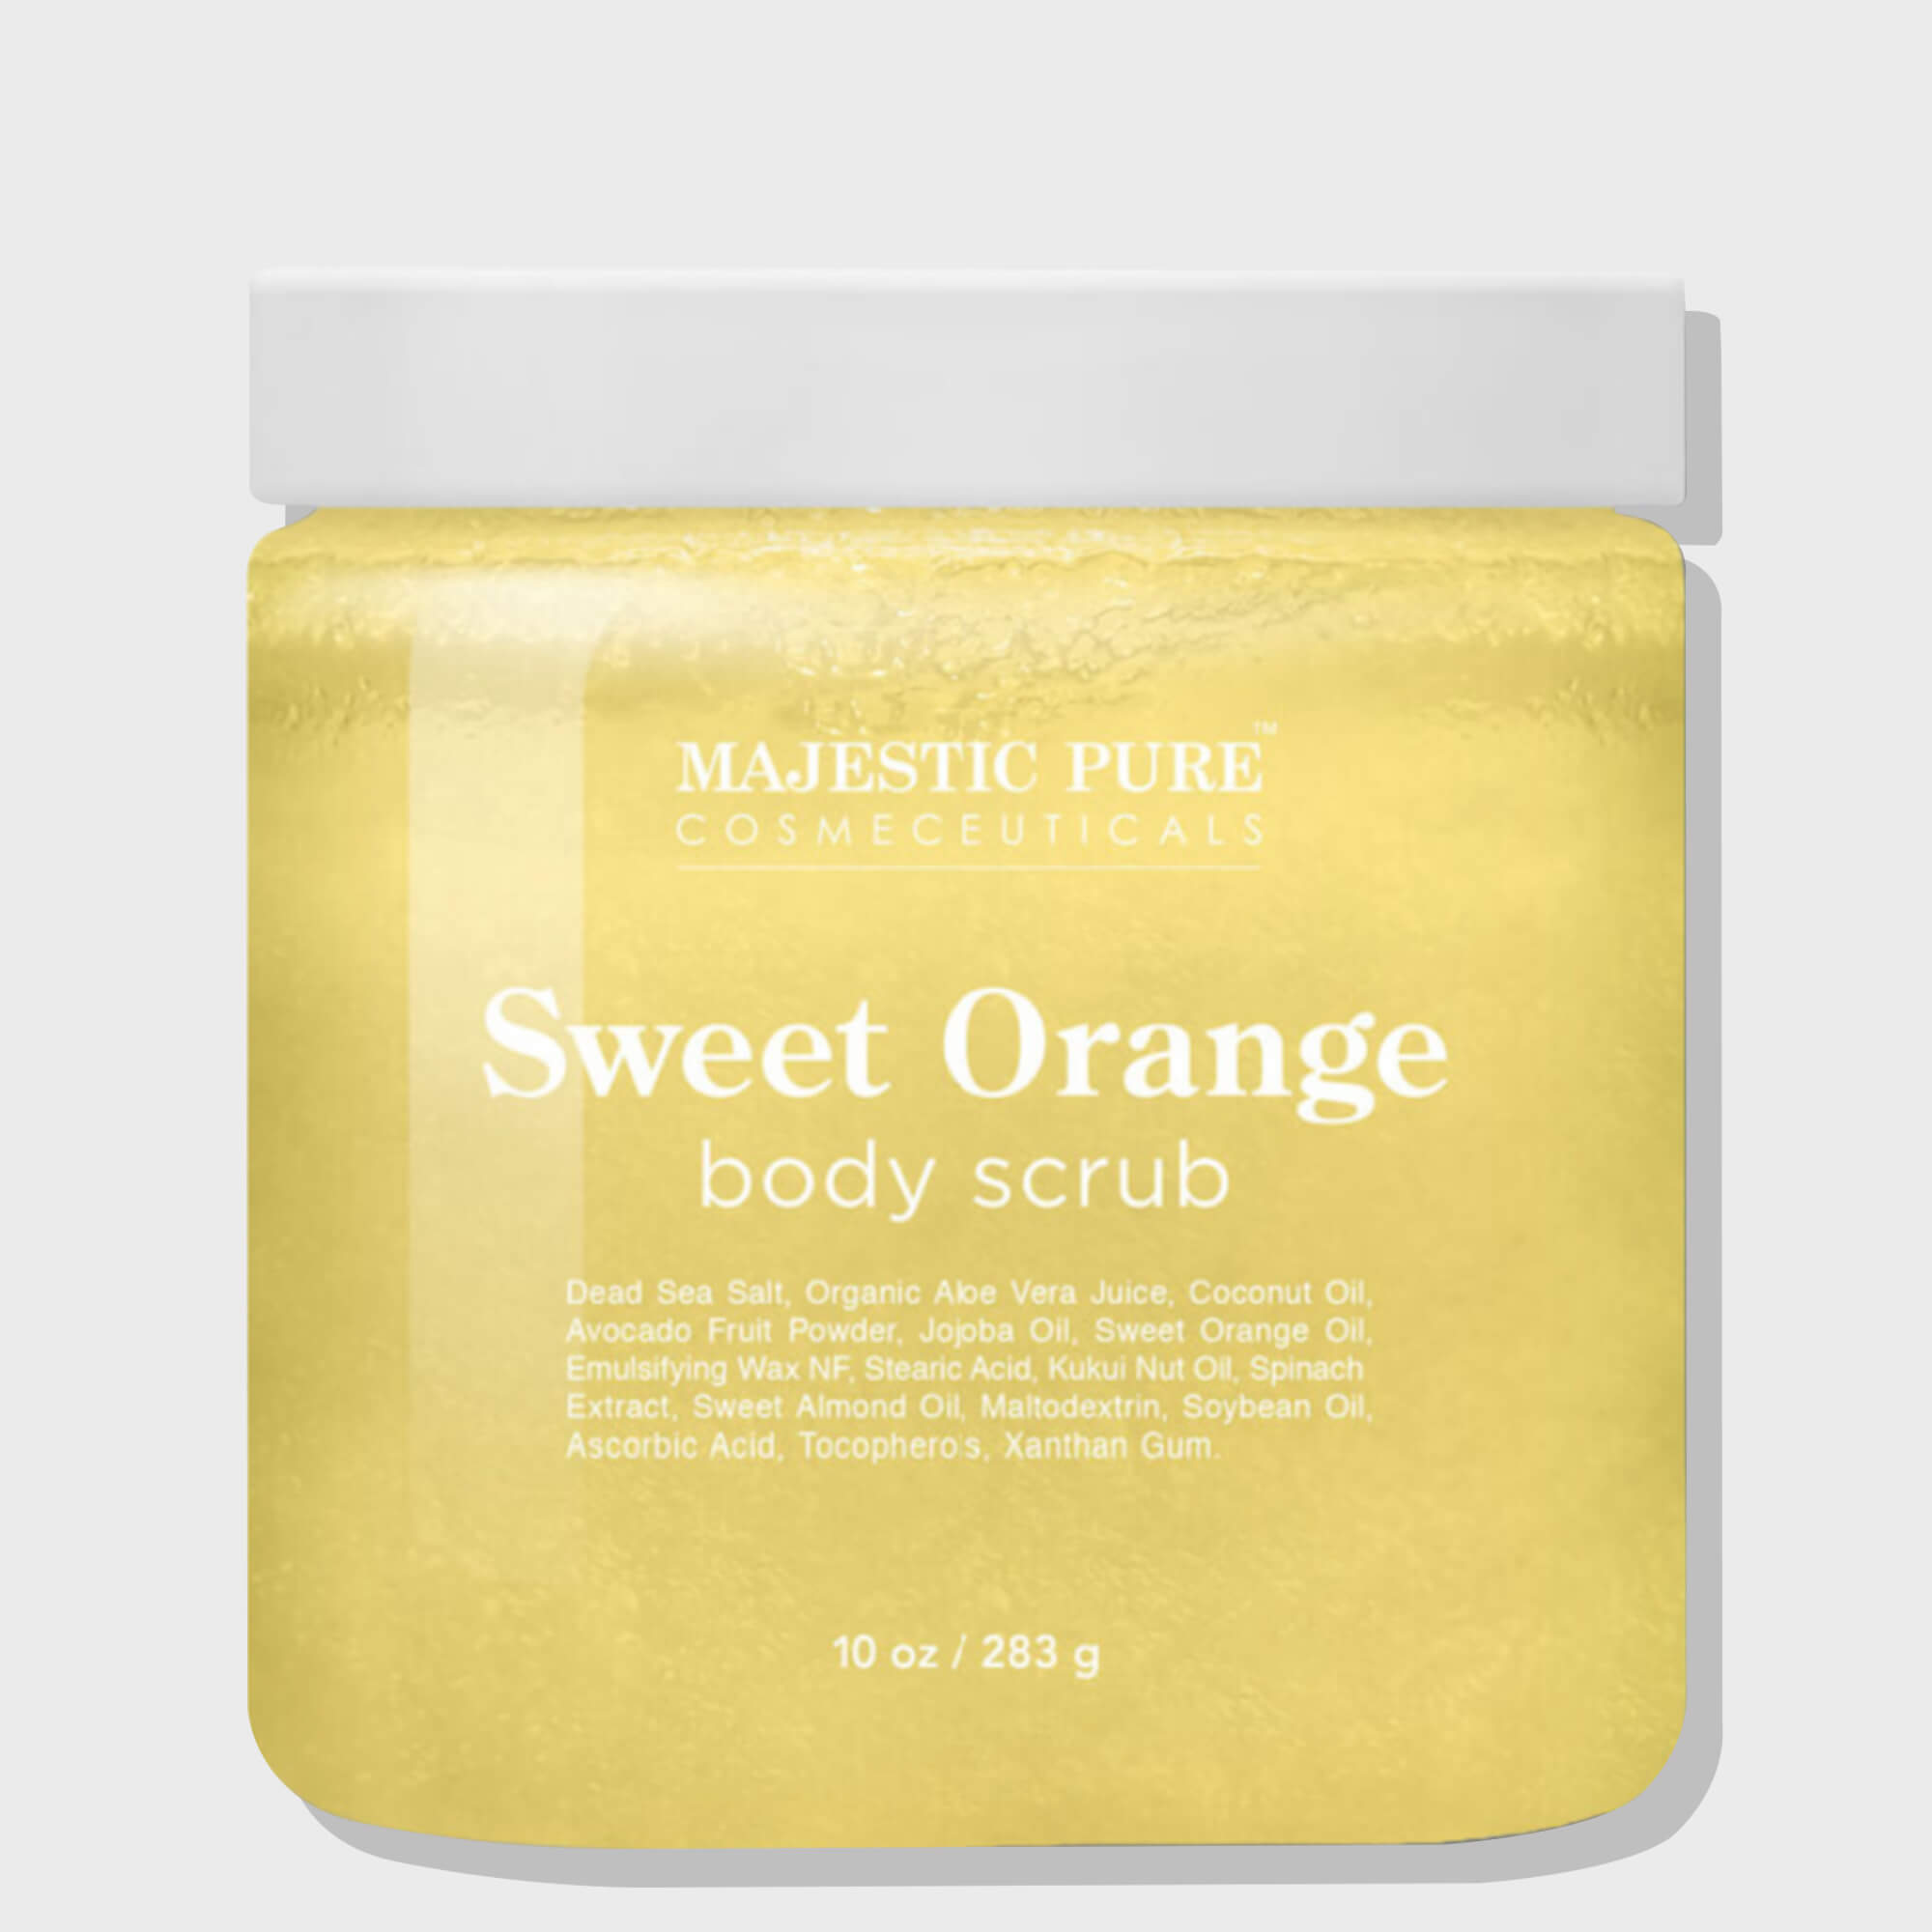 Majestic Pure Sweet Orange Body Scrub - Exfoliates